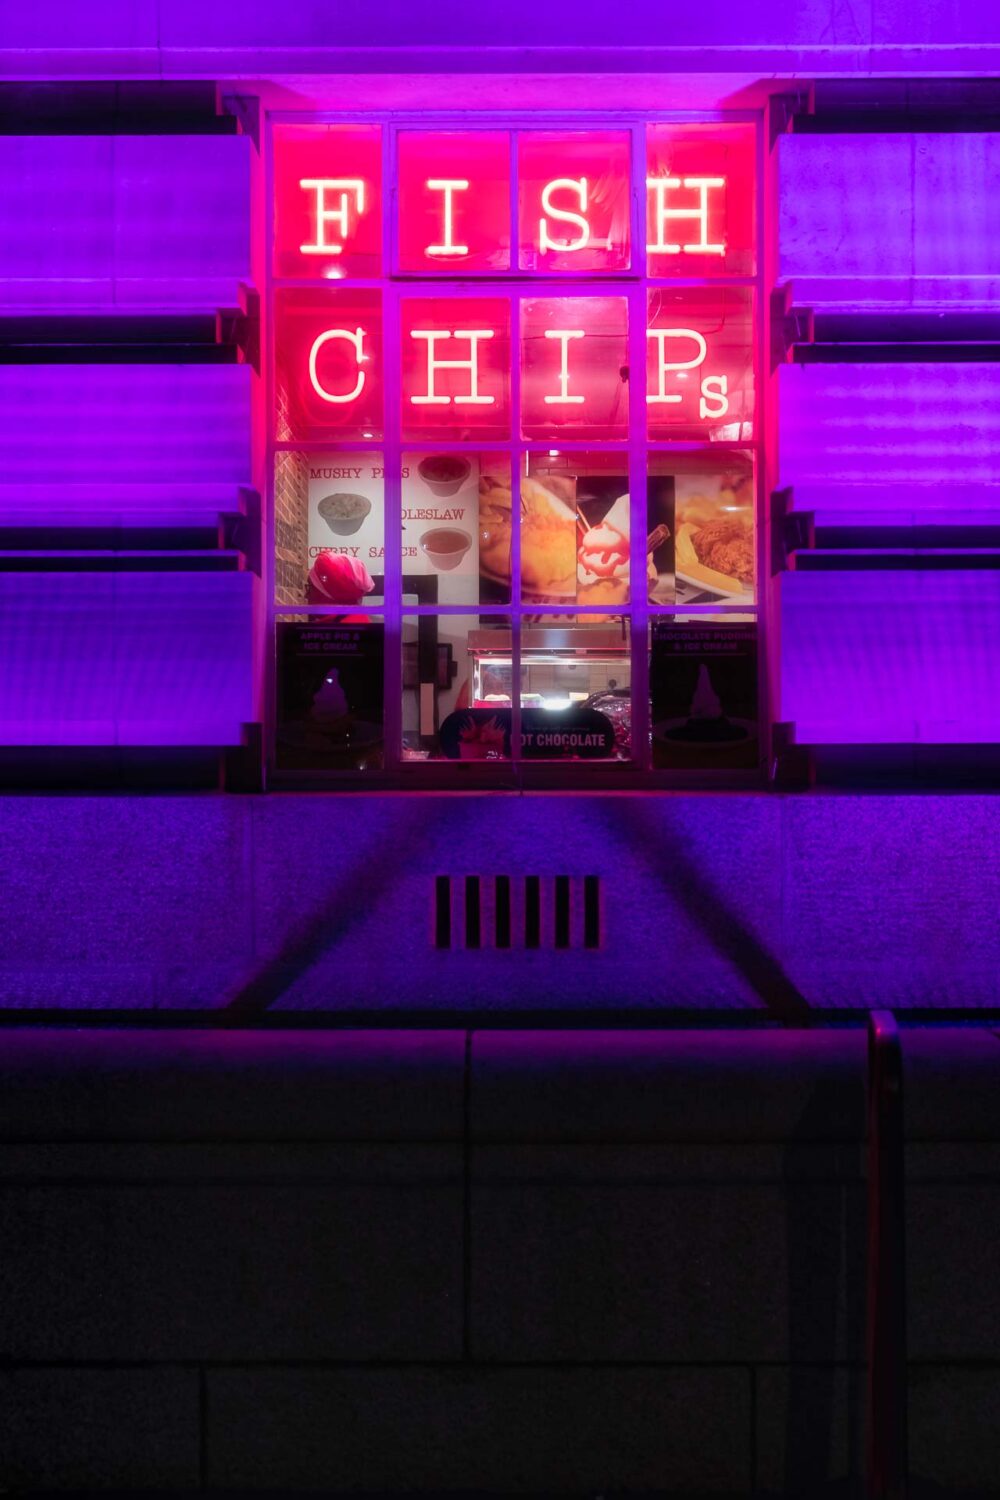 London city night lights by DIVCreativo